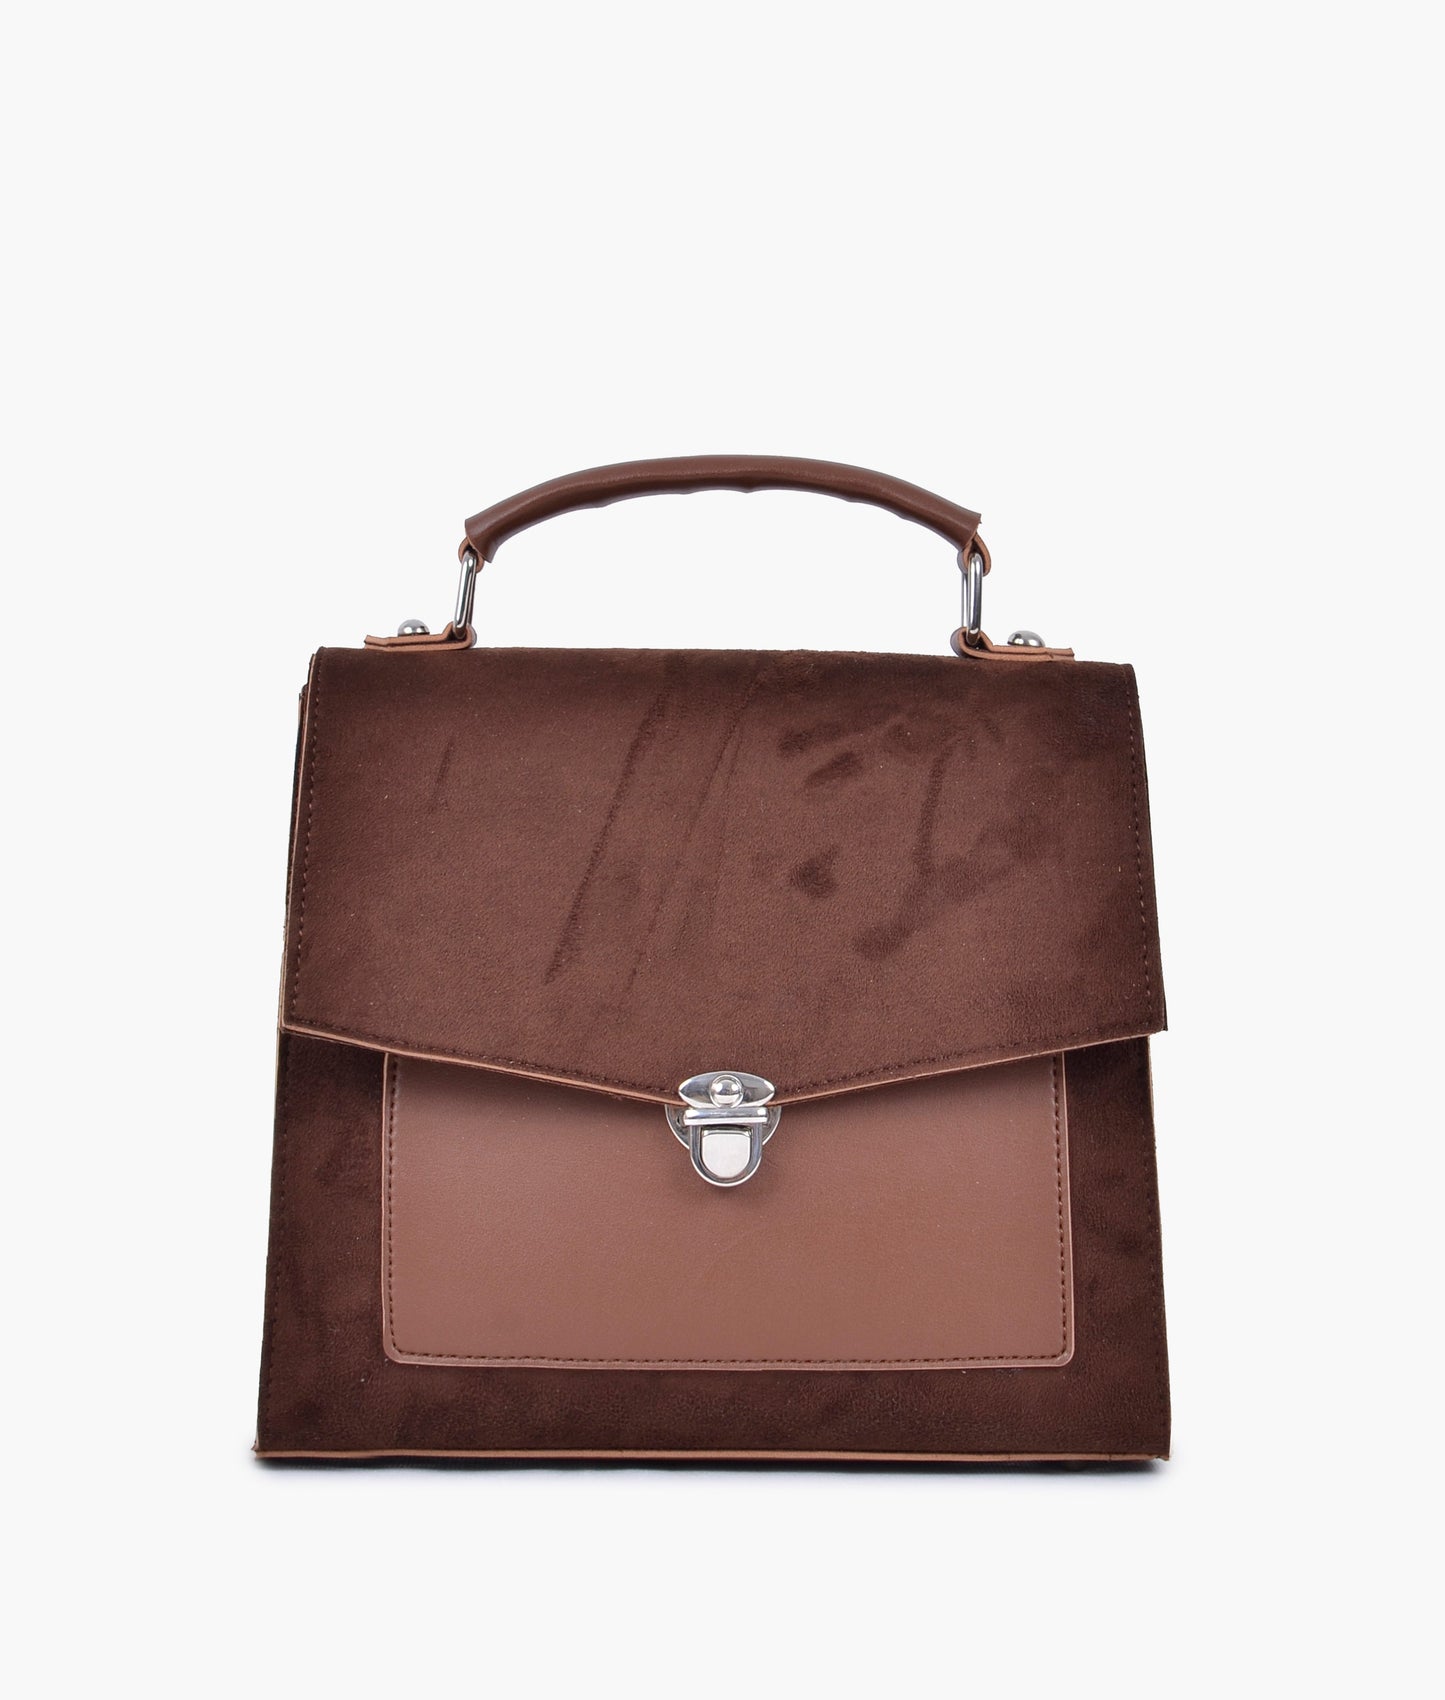 Coffee Handbag For Women 4192